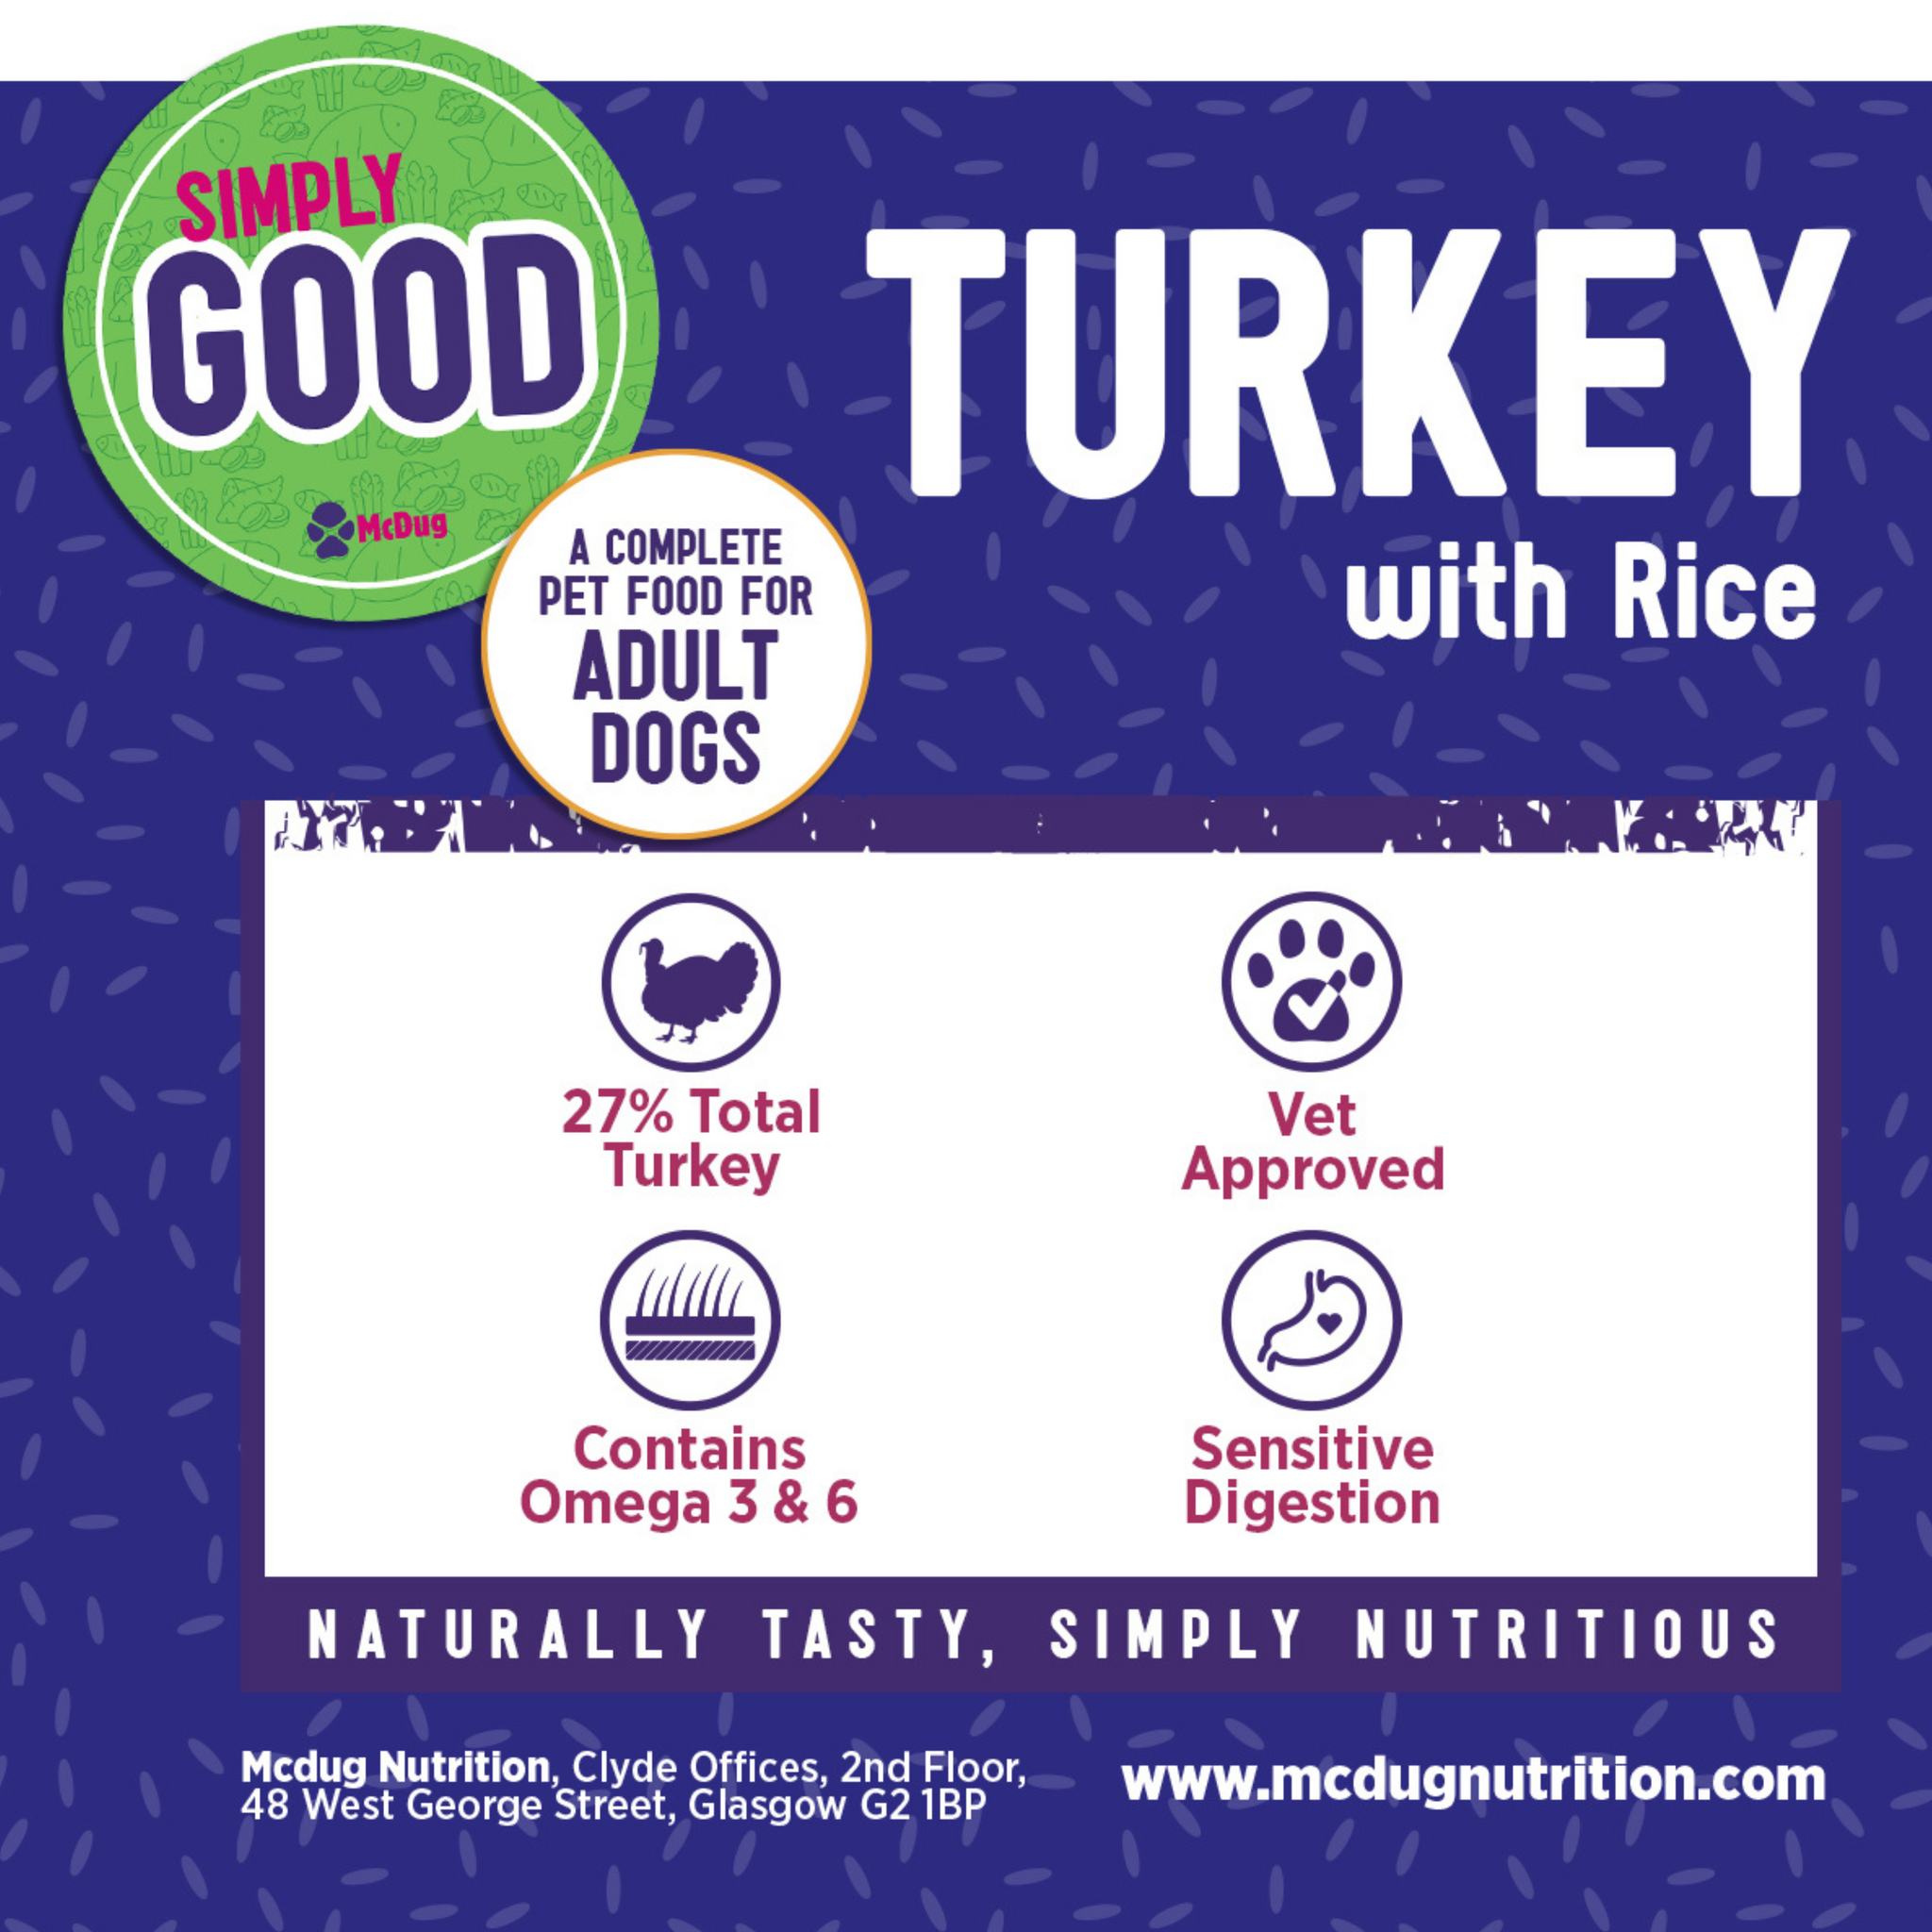 Simply Good Turkey with Rice